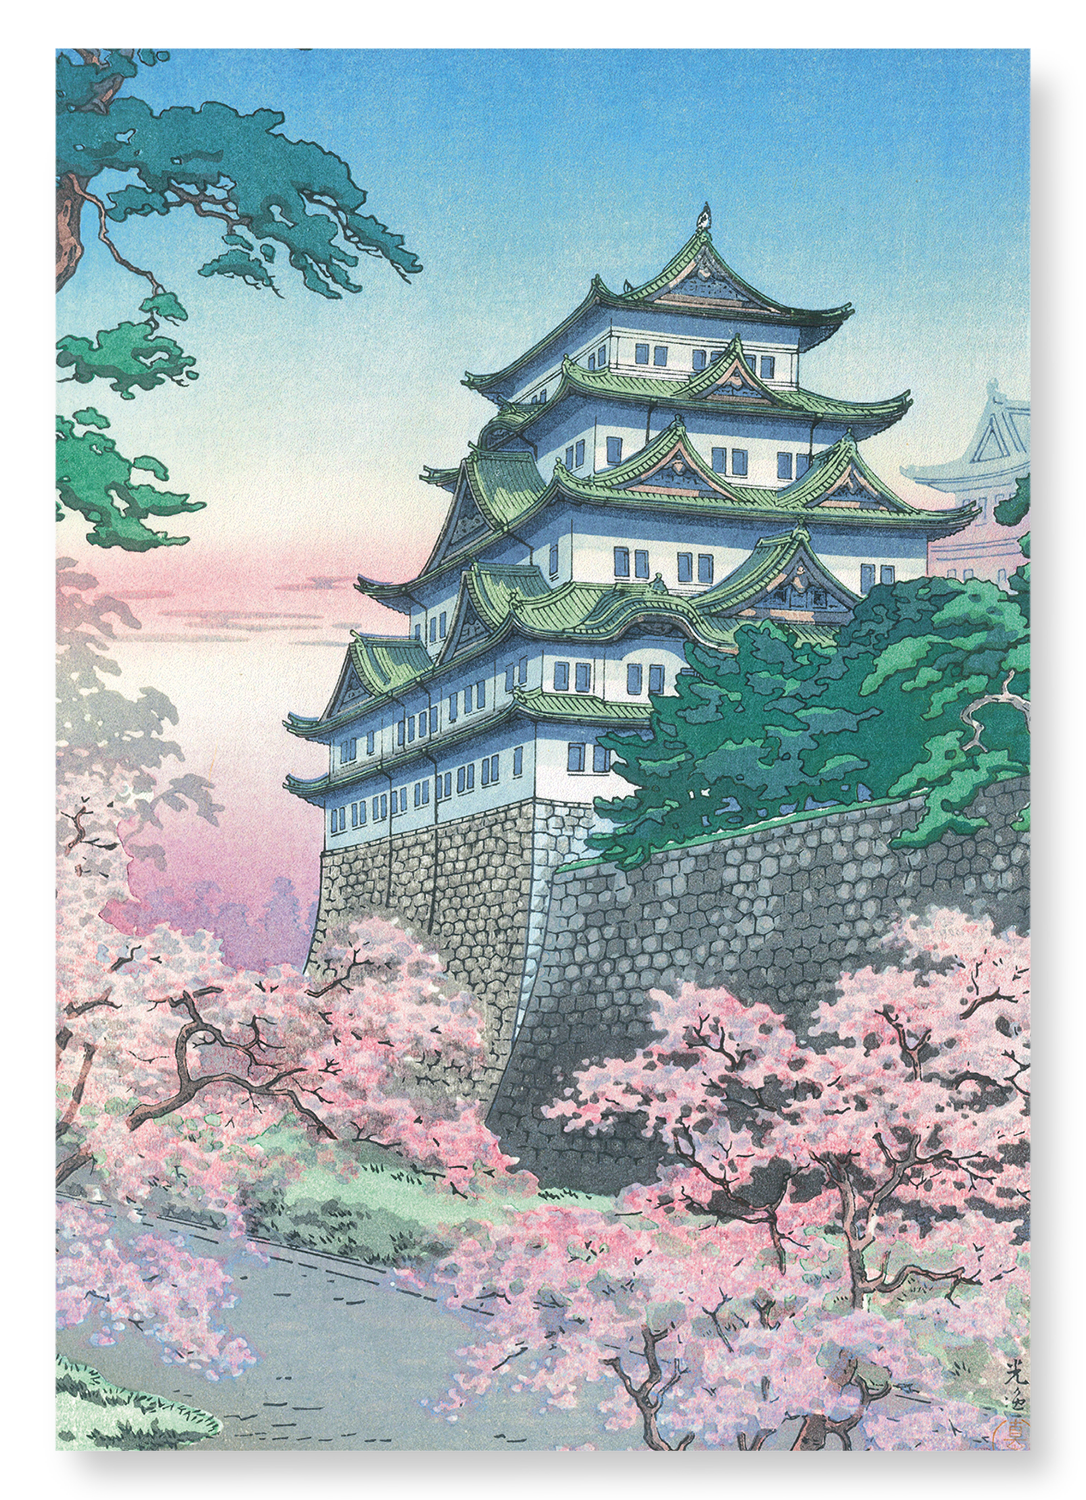 NAGOYA CASTLE IN THE SPRING: Japanese Art Print